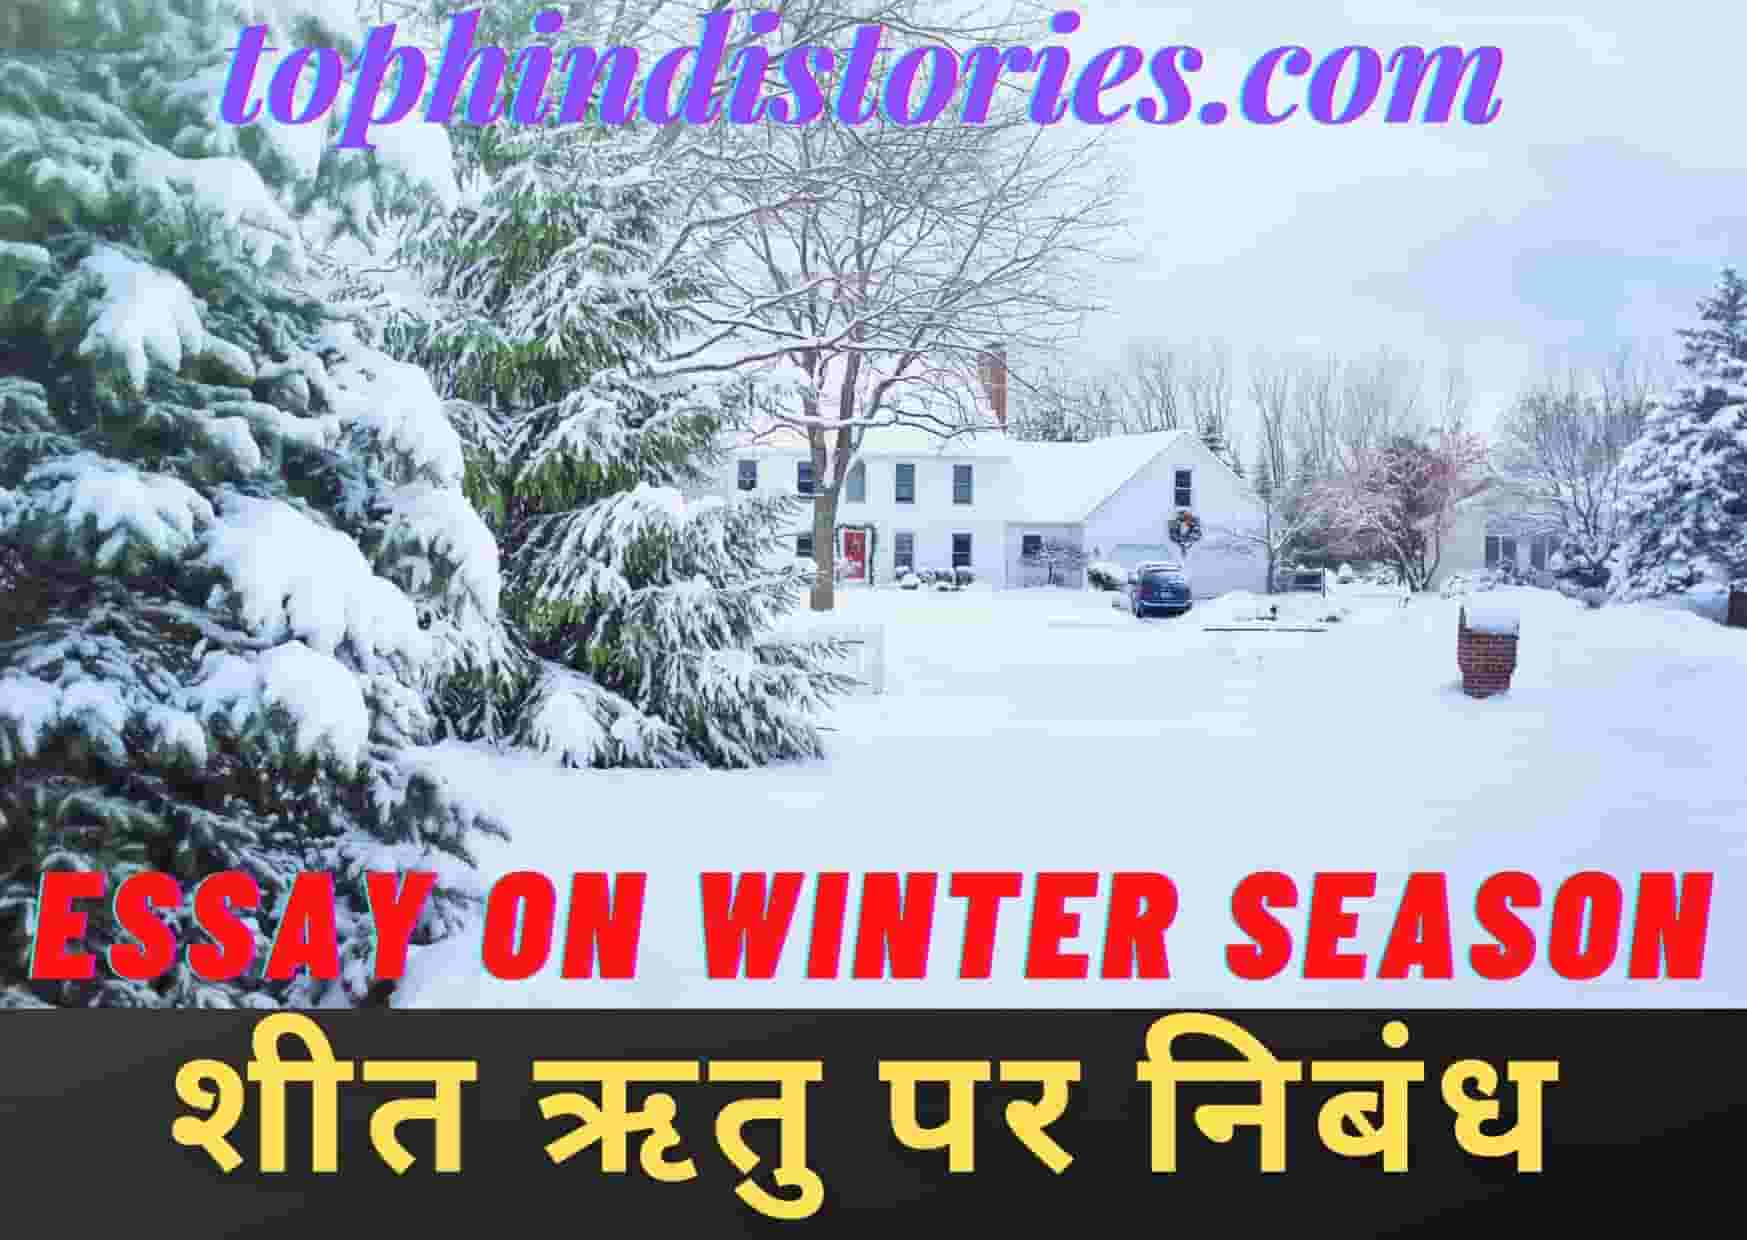 Short essay about winter season in Hindi